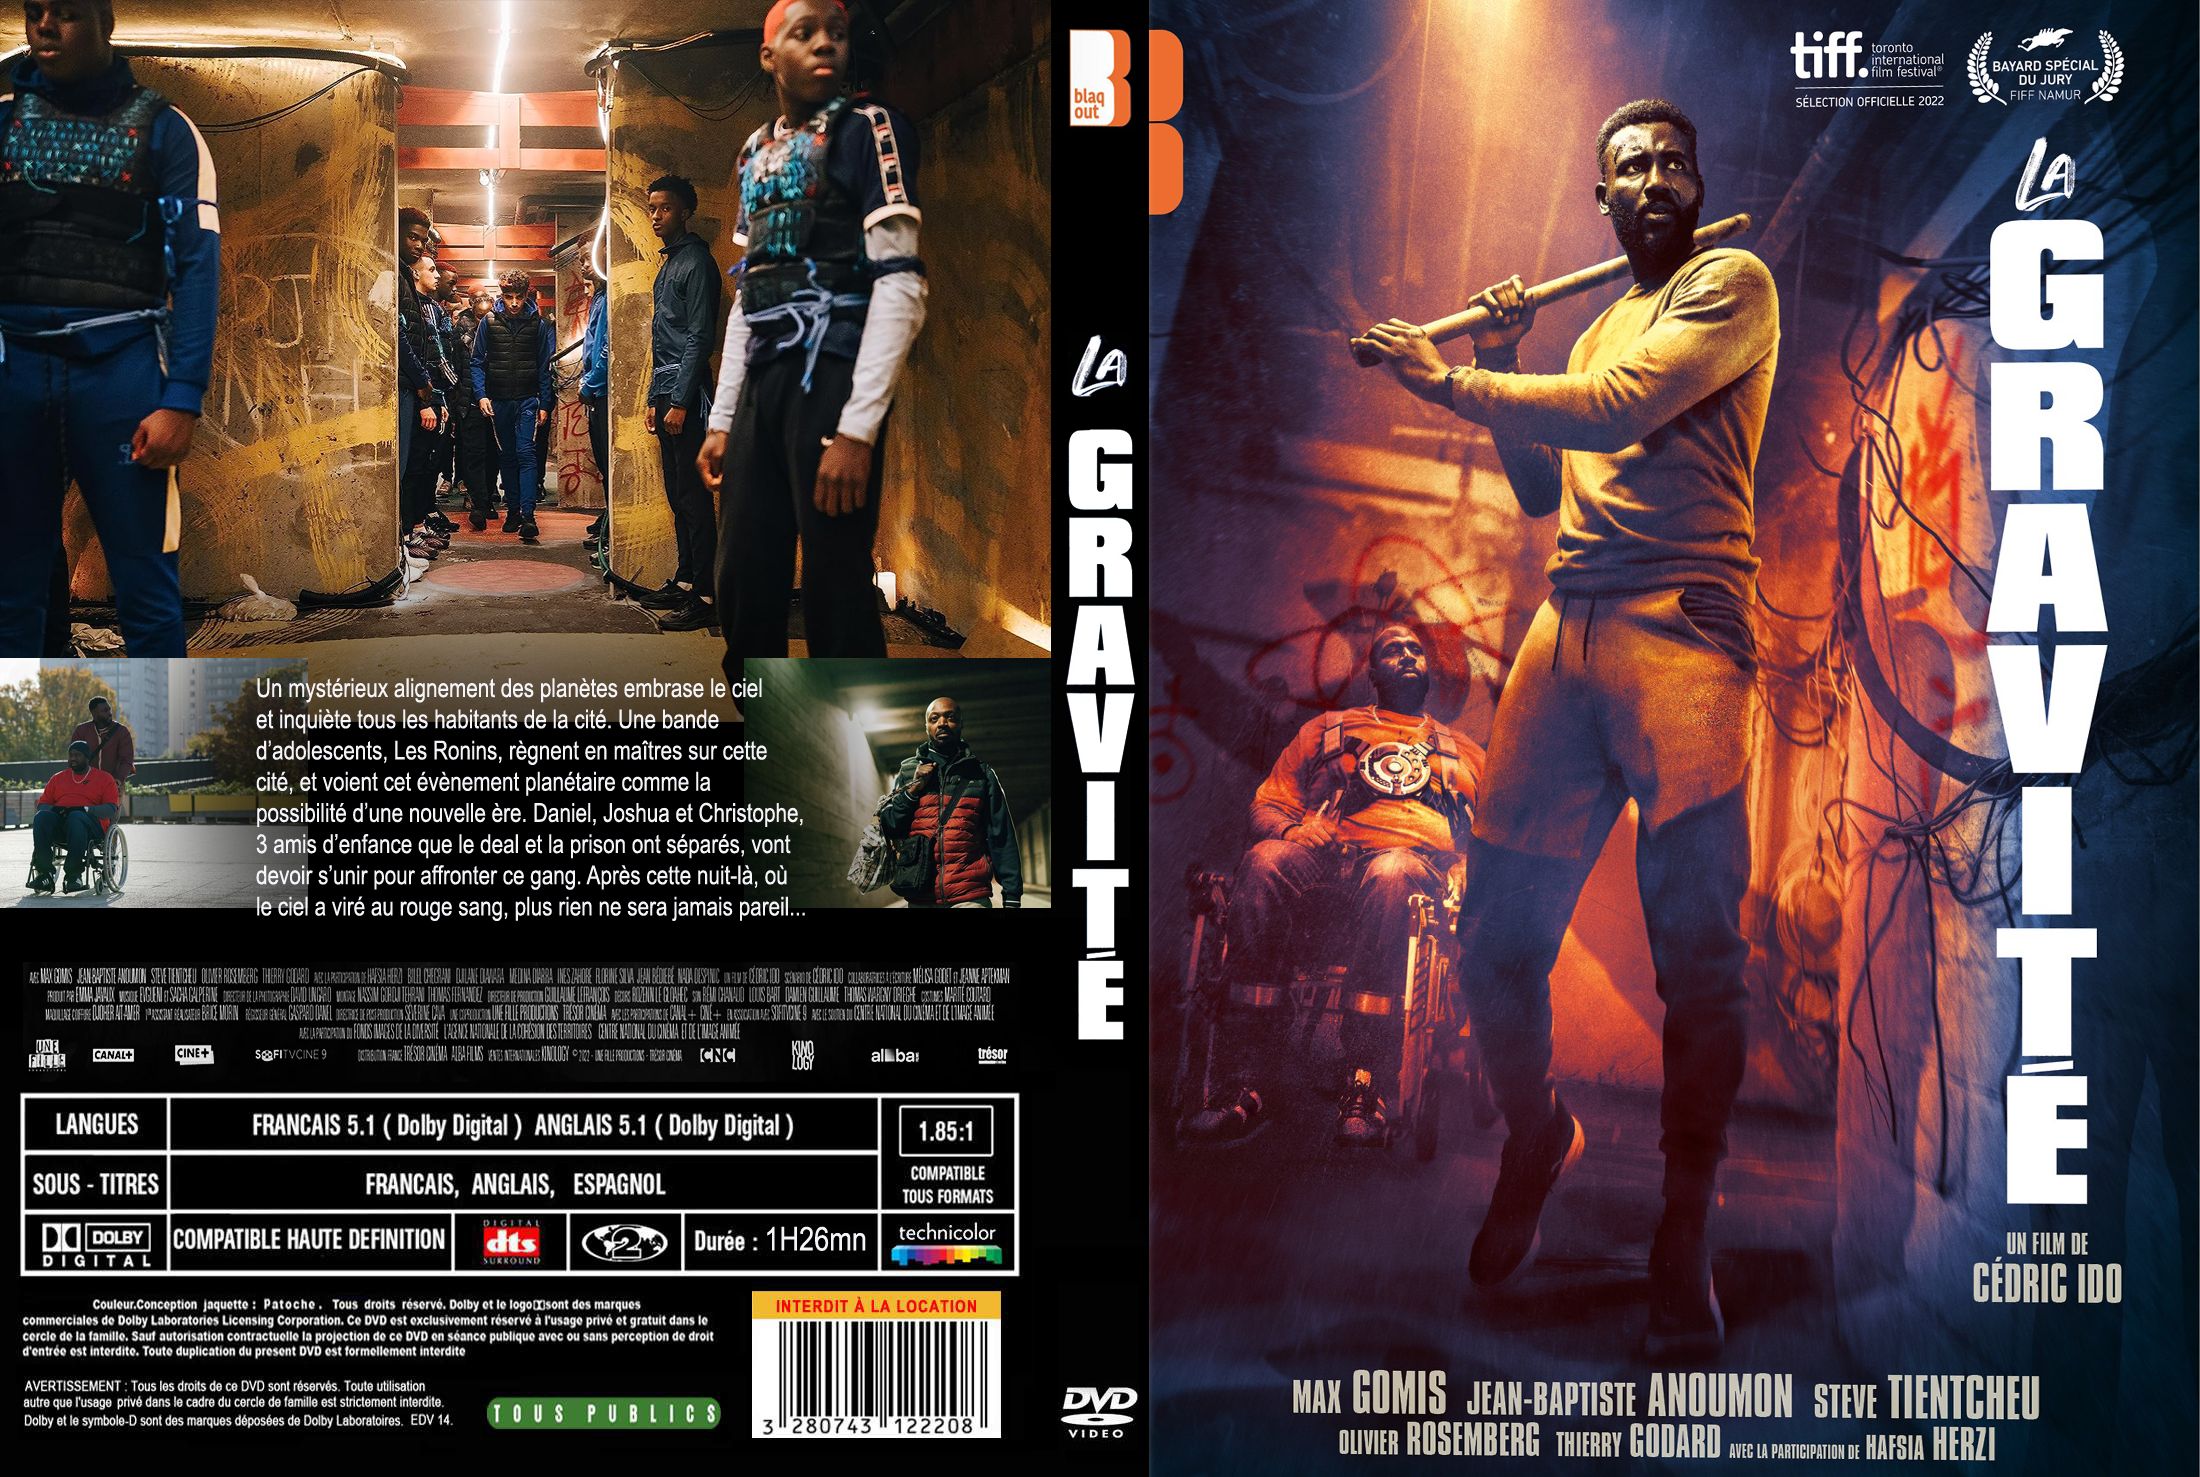 Jaquette DVD La gravit custom